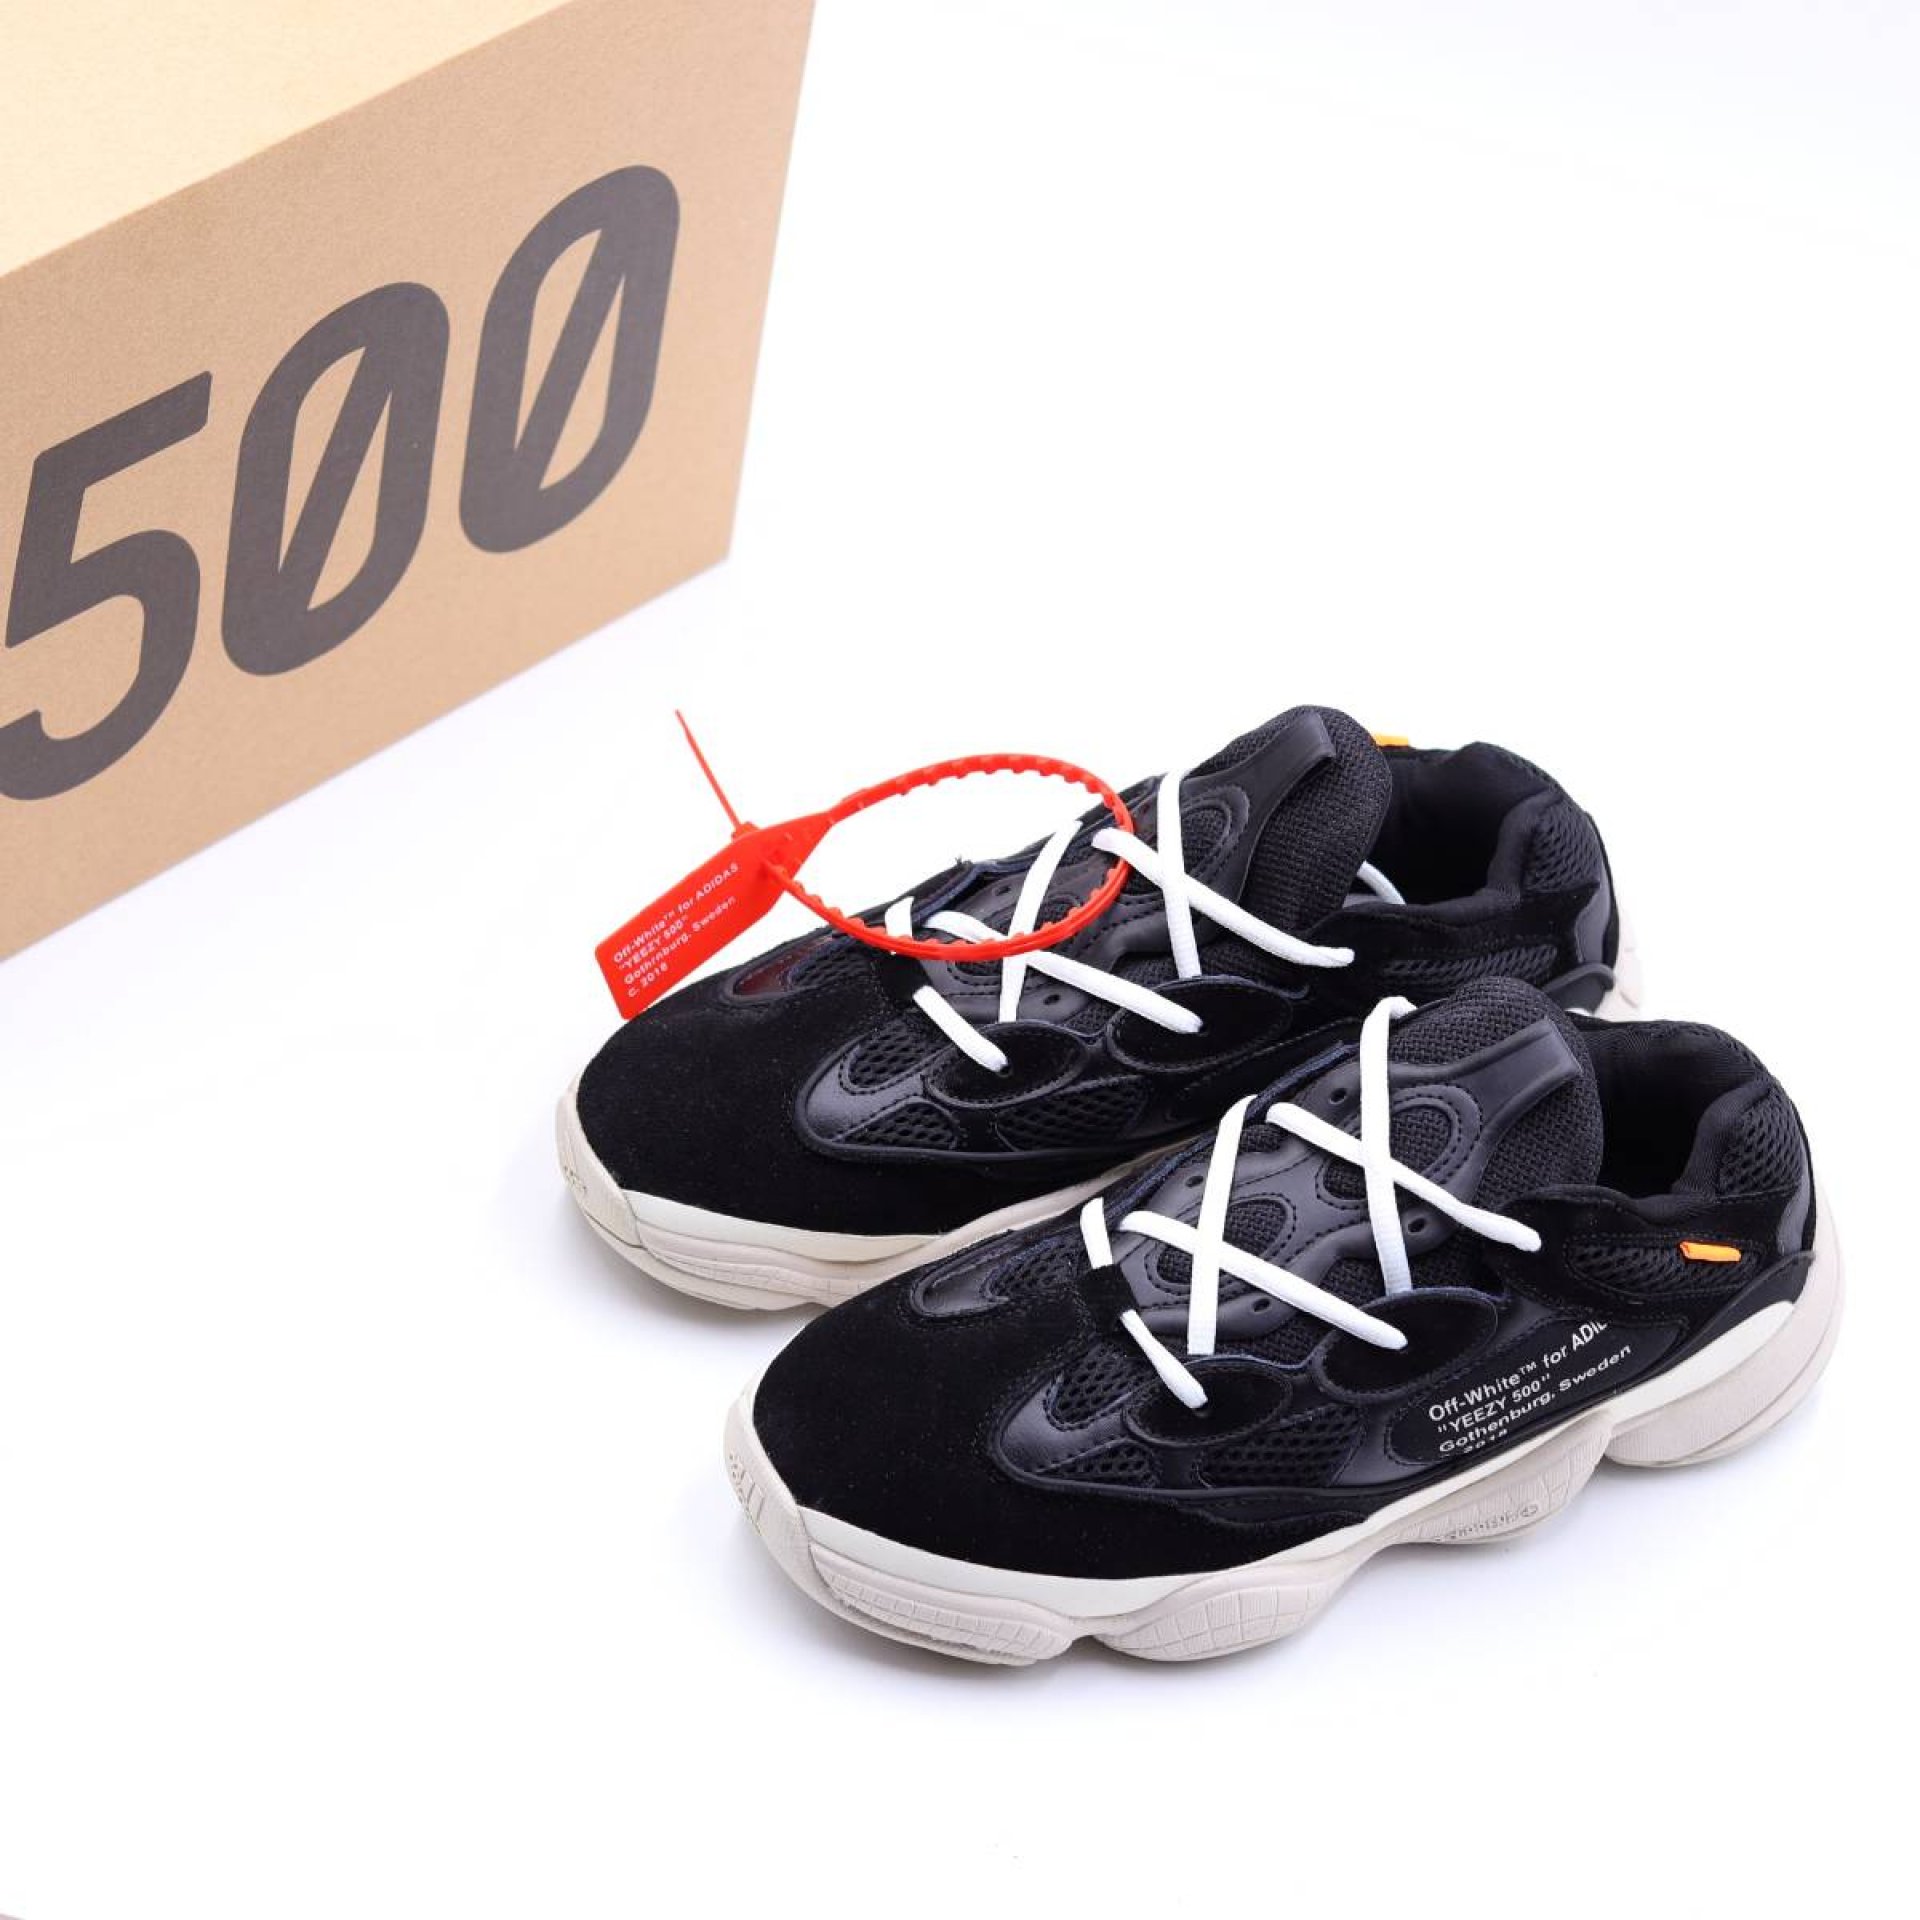 Adidas 500 (Off-White Black) 3sbrands.pk